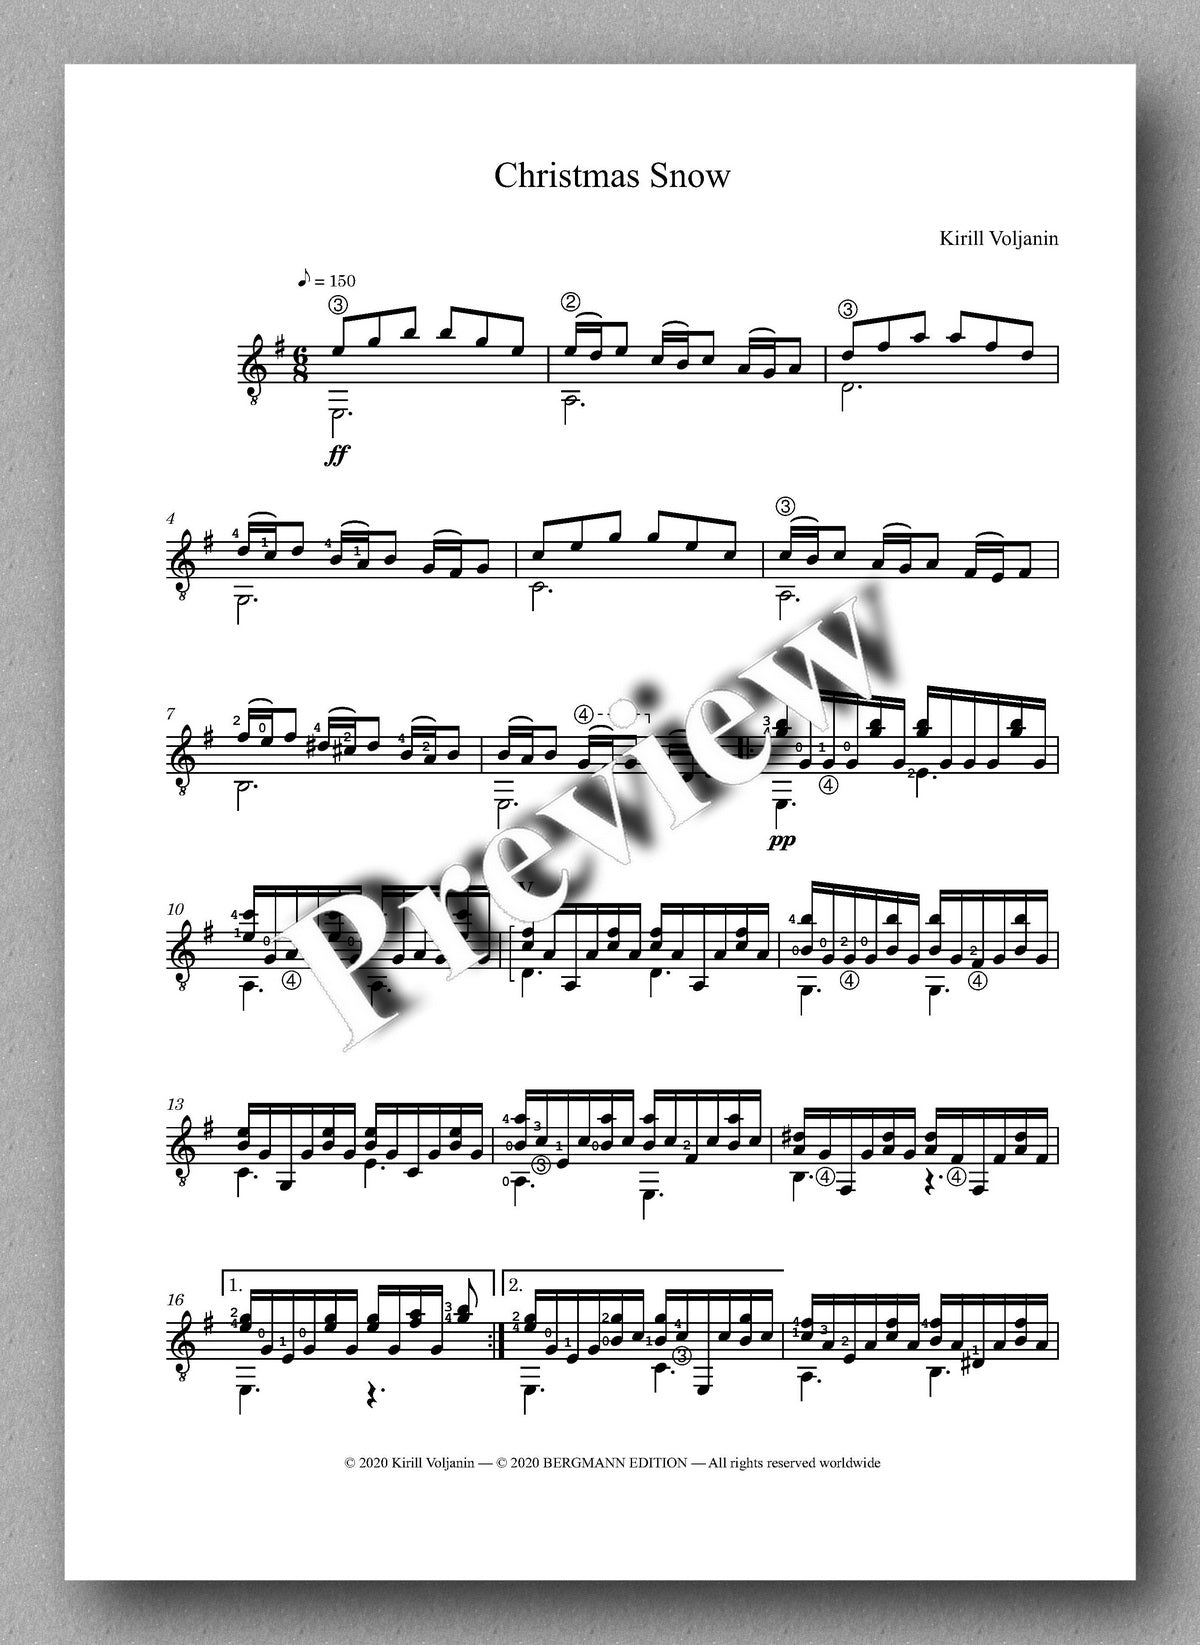 Kirill Voljanin, Winter Joy - music score 1